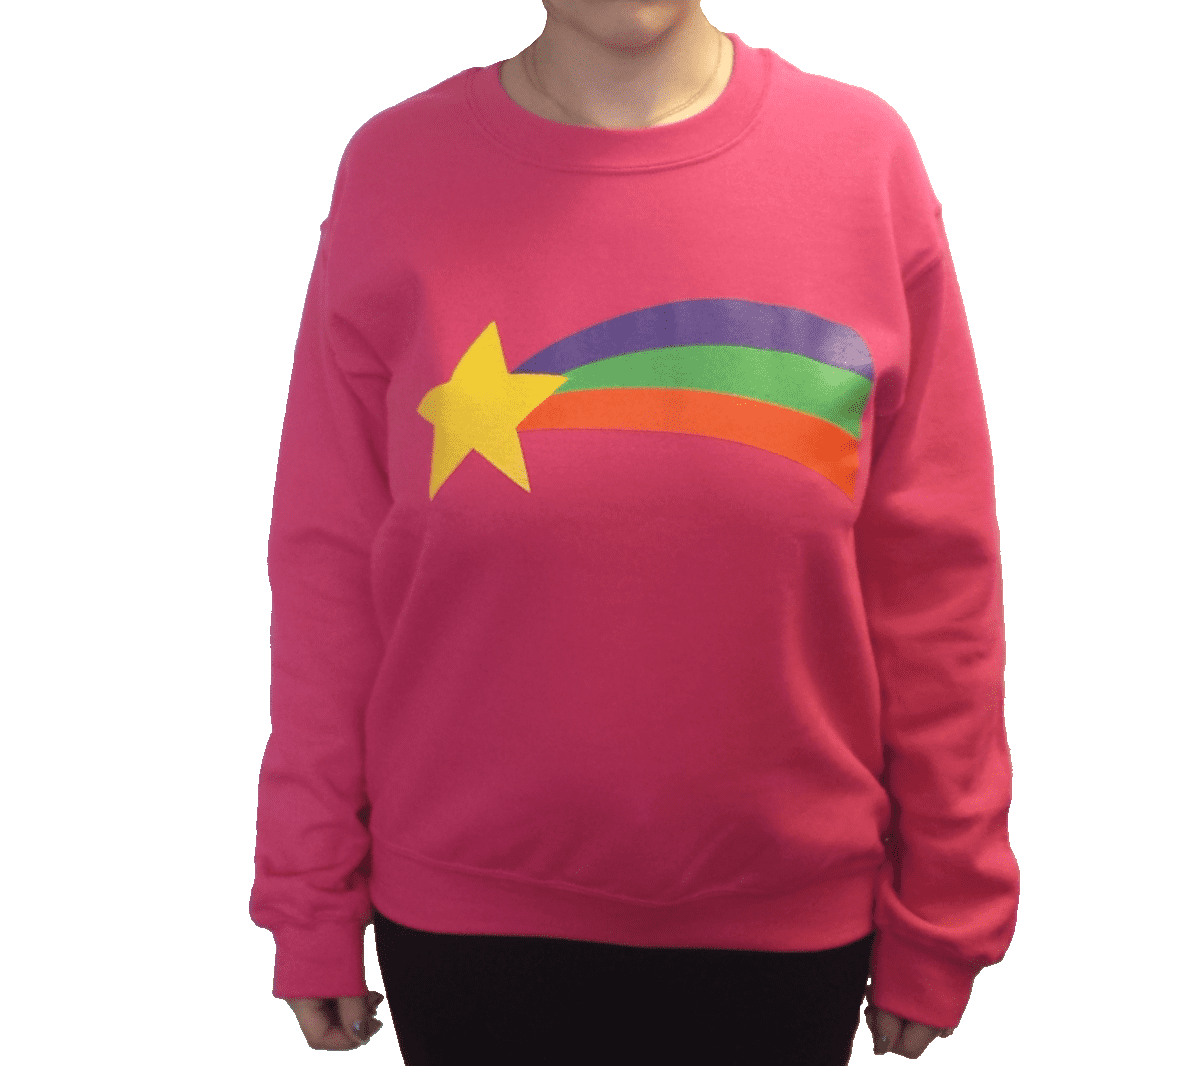 Mabel Pines Sweatshirt Gravity Falls Costume Pink Cosplay Rainbow TV Cartoon